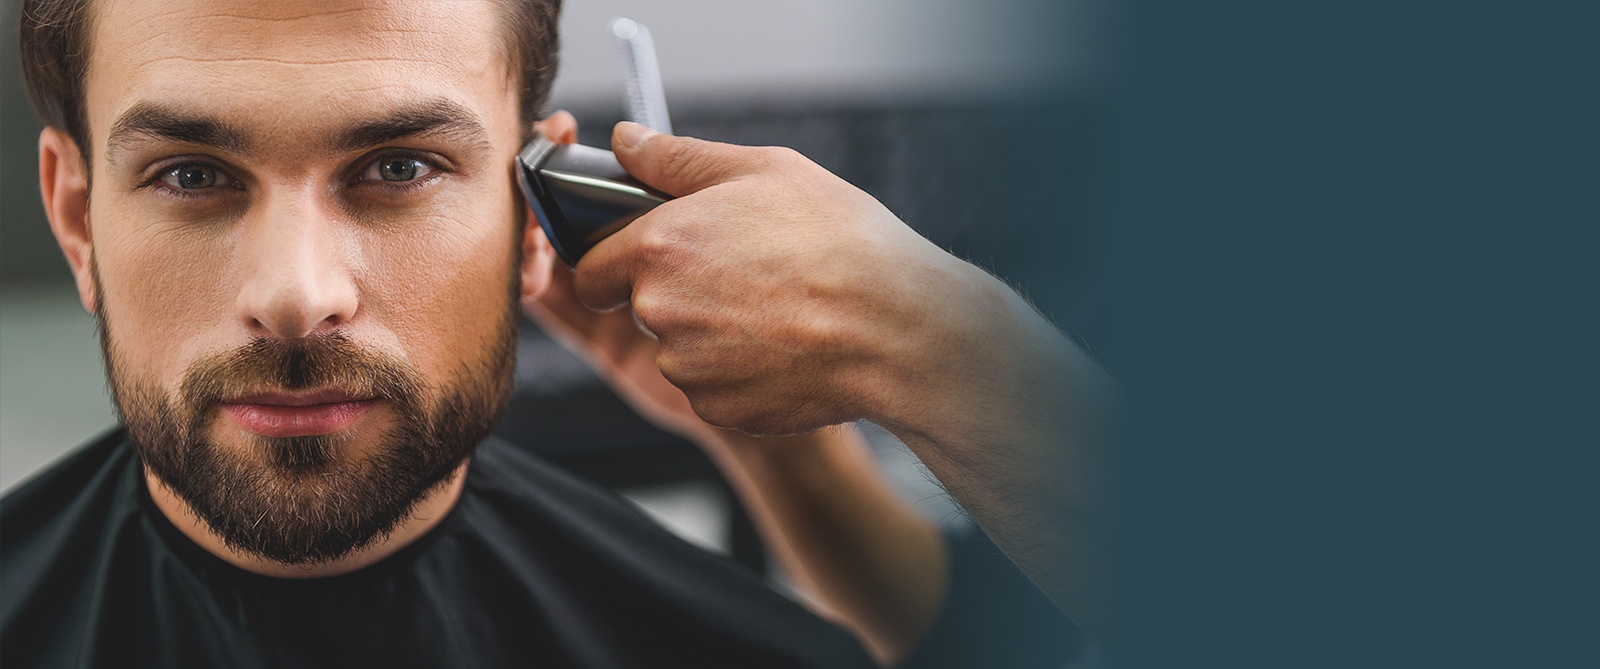 Men's Hair Design / Styling Services in Burlington, Ontario